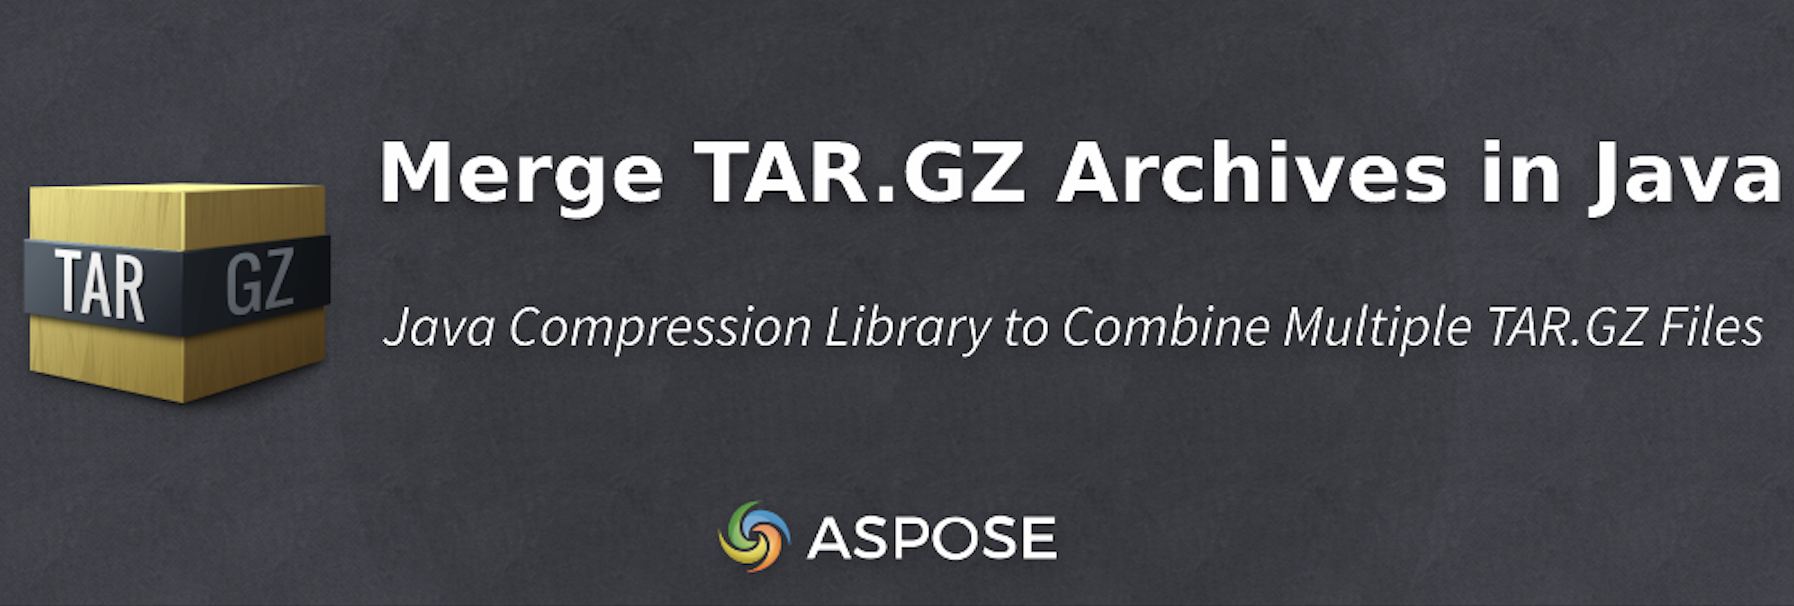 Merge TAR.GZ Archives in Java Programmatically